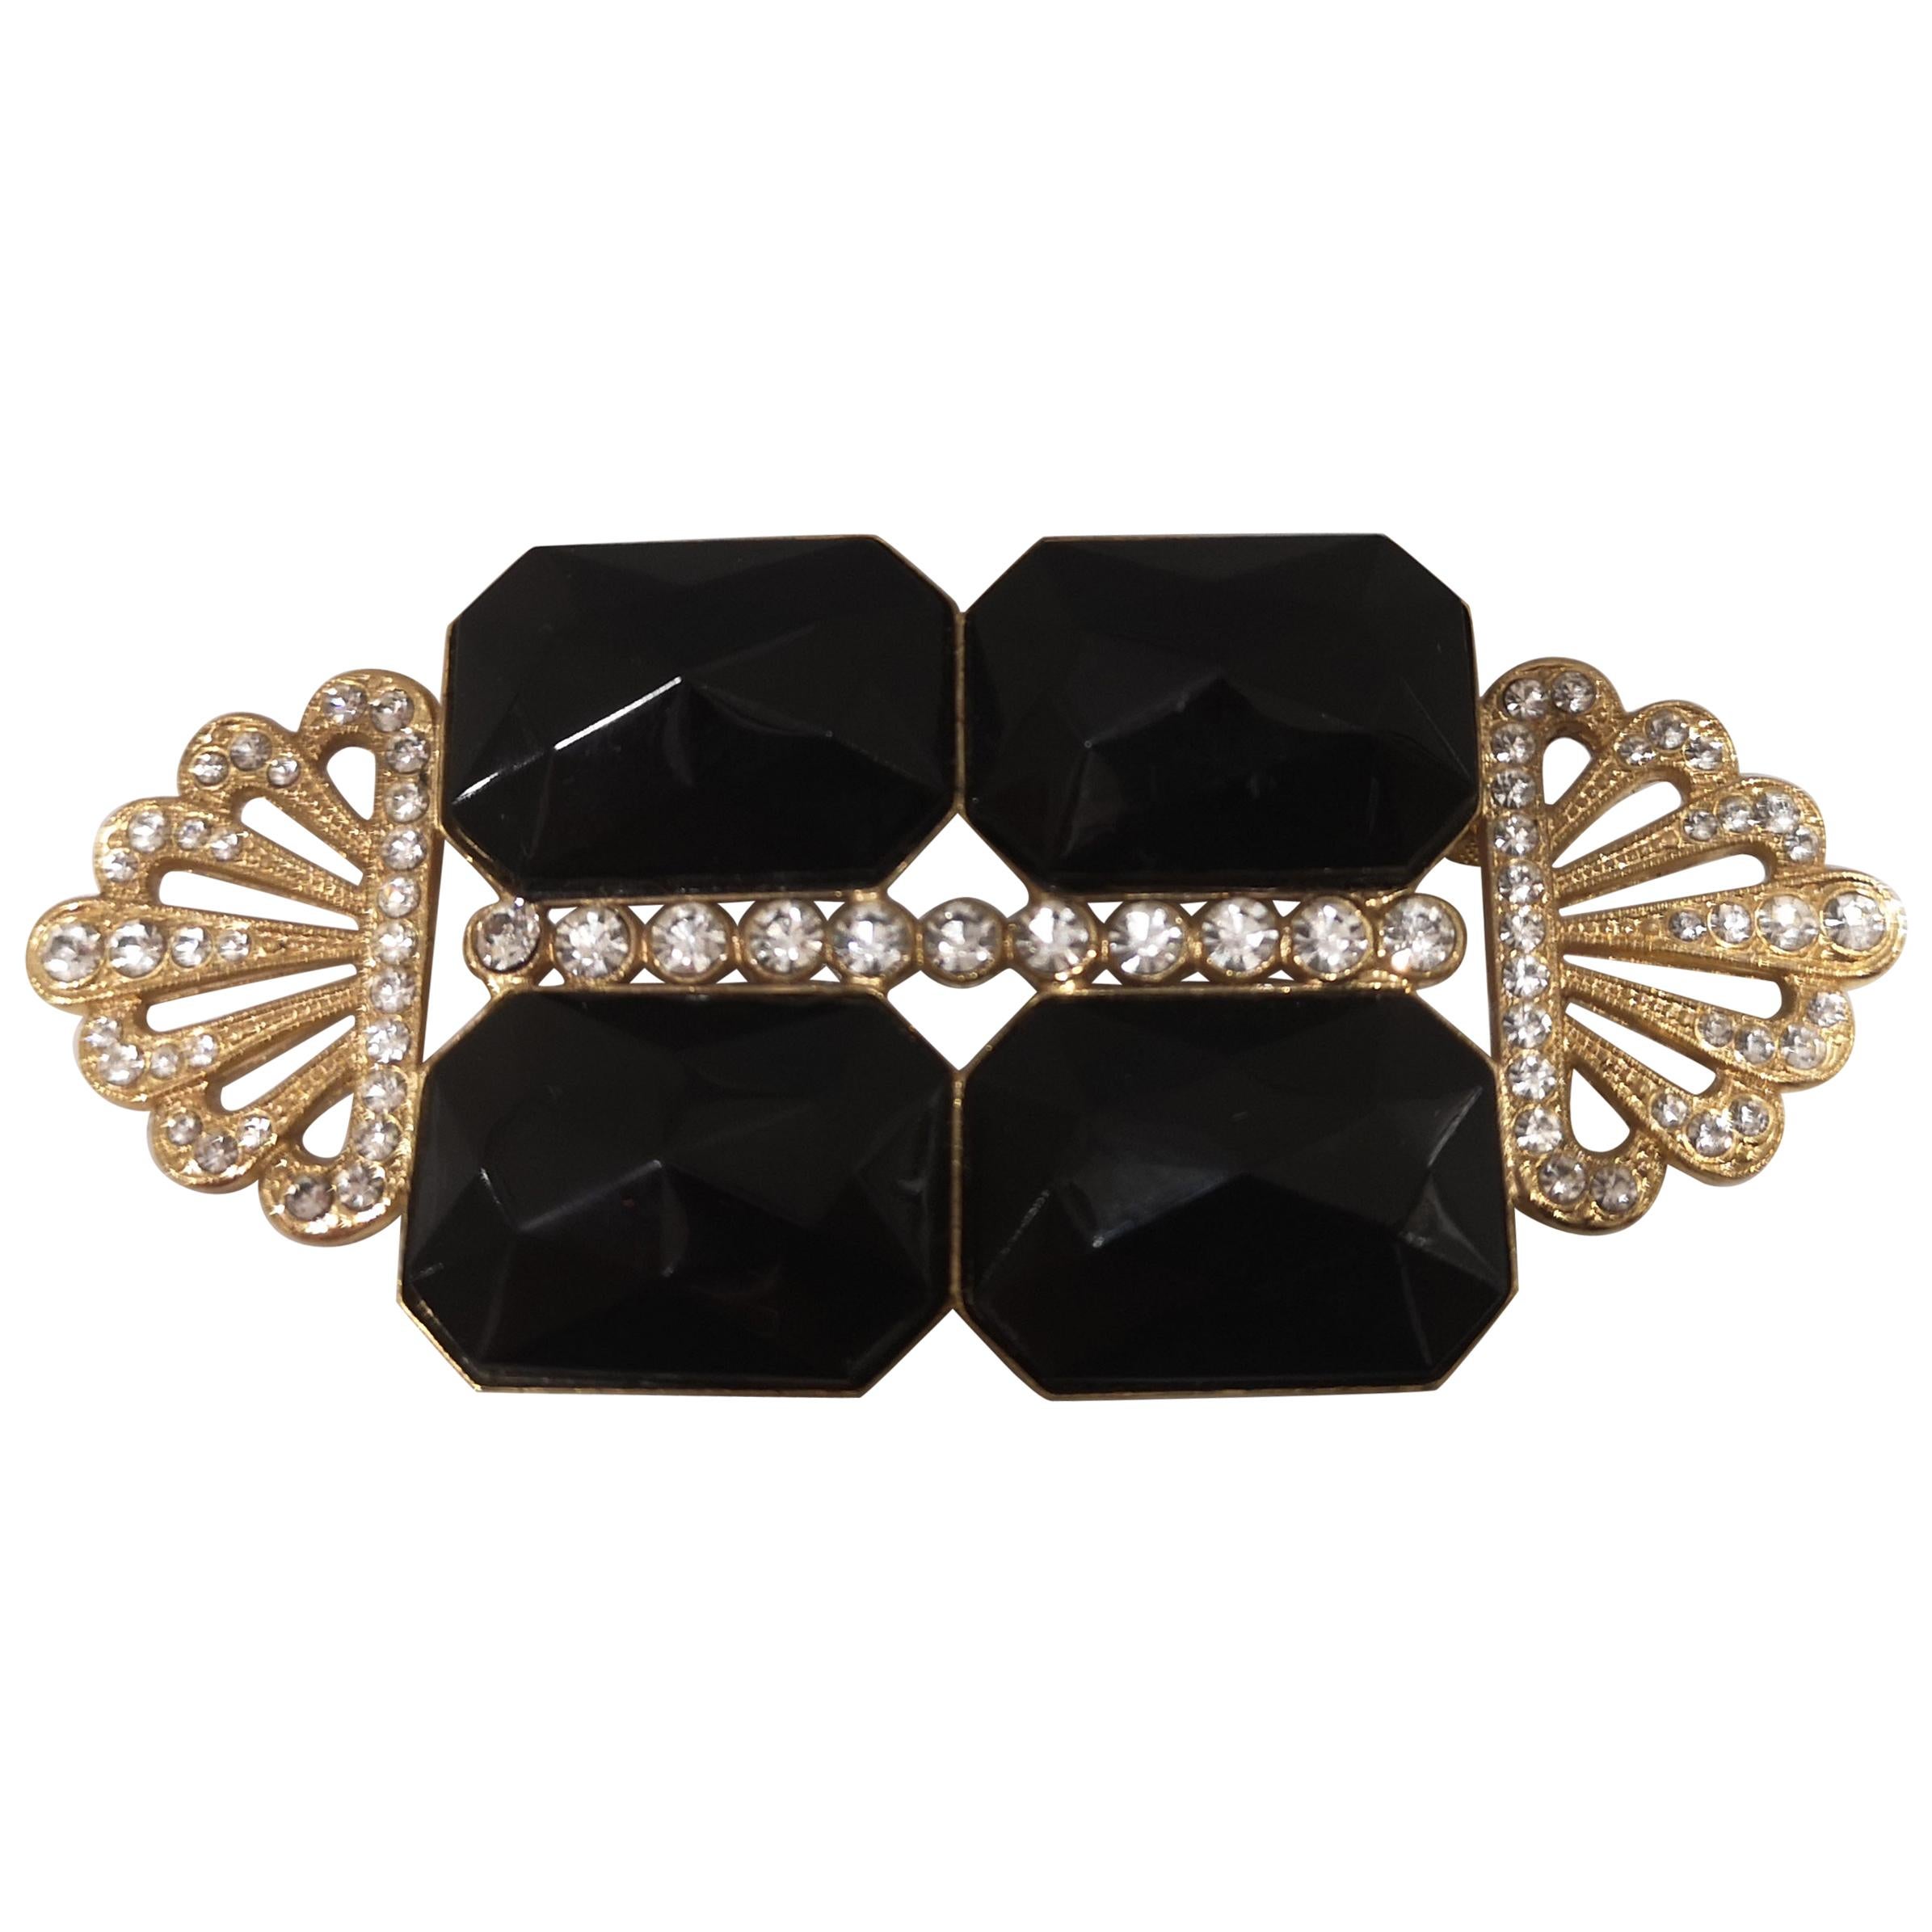 Vintage gold tone black stones brooch